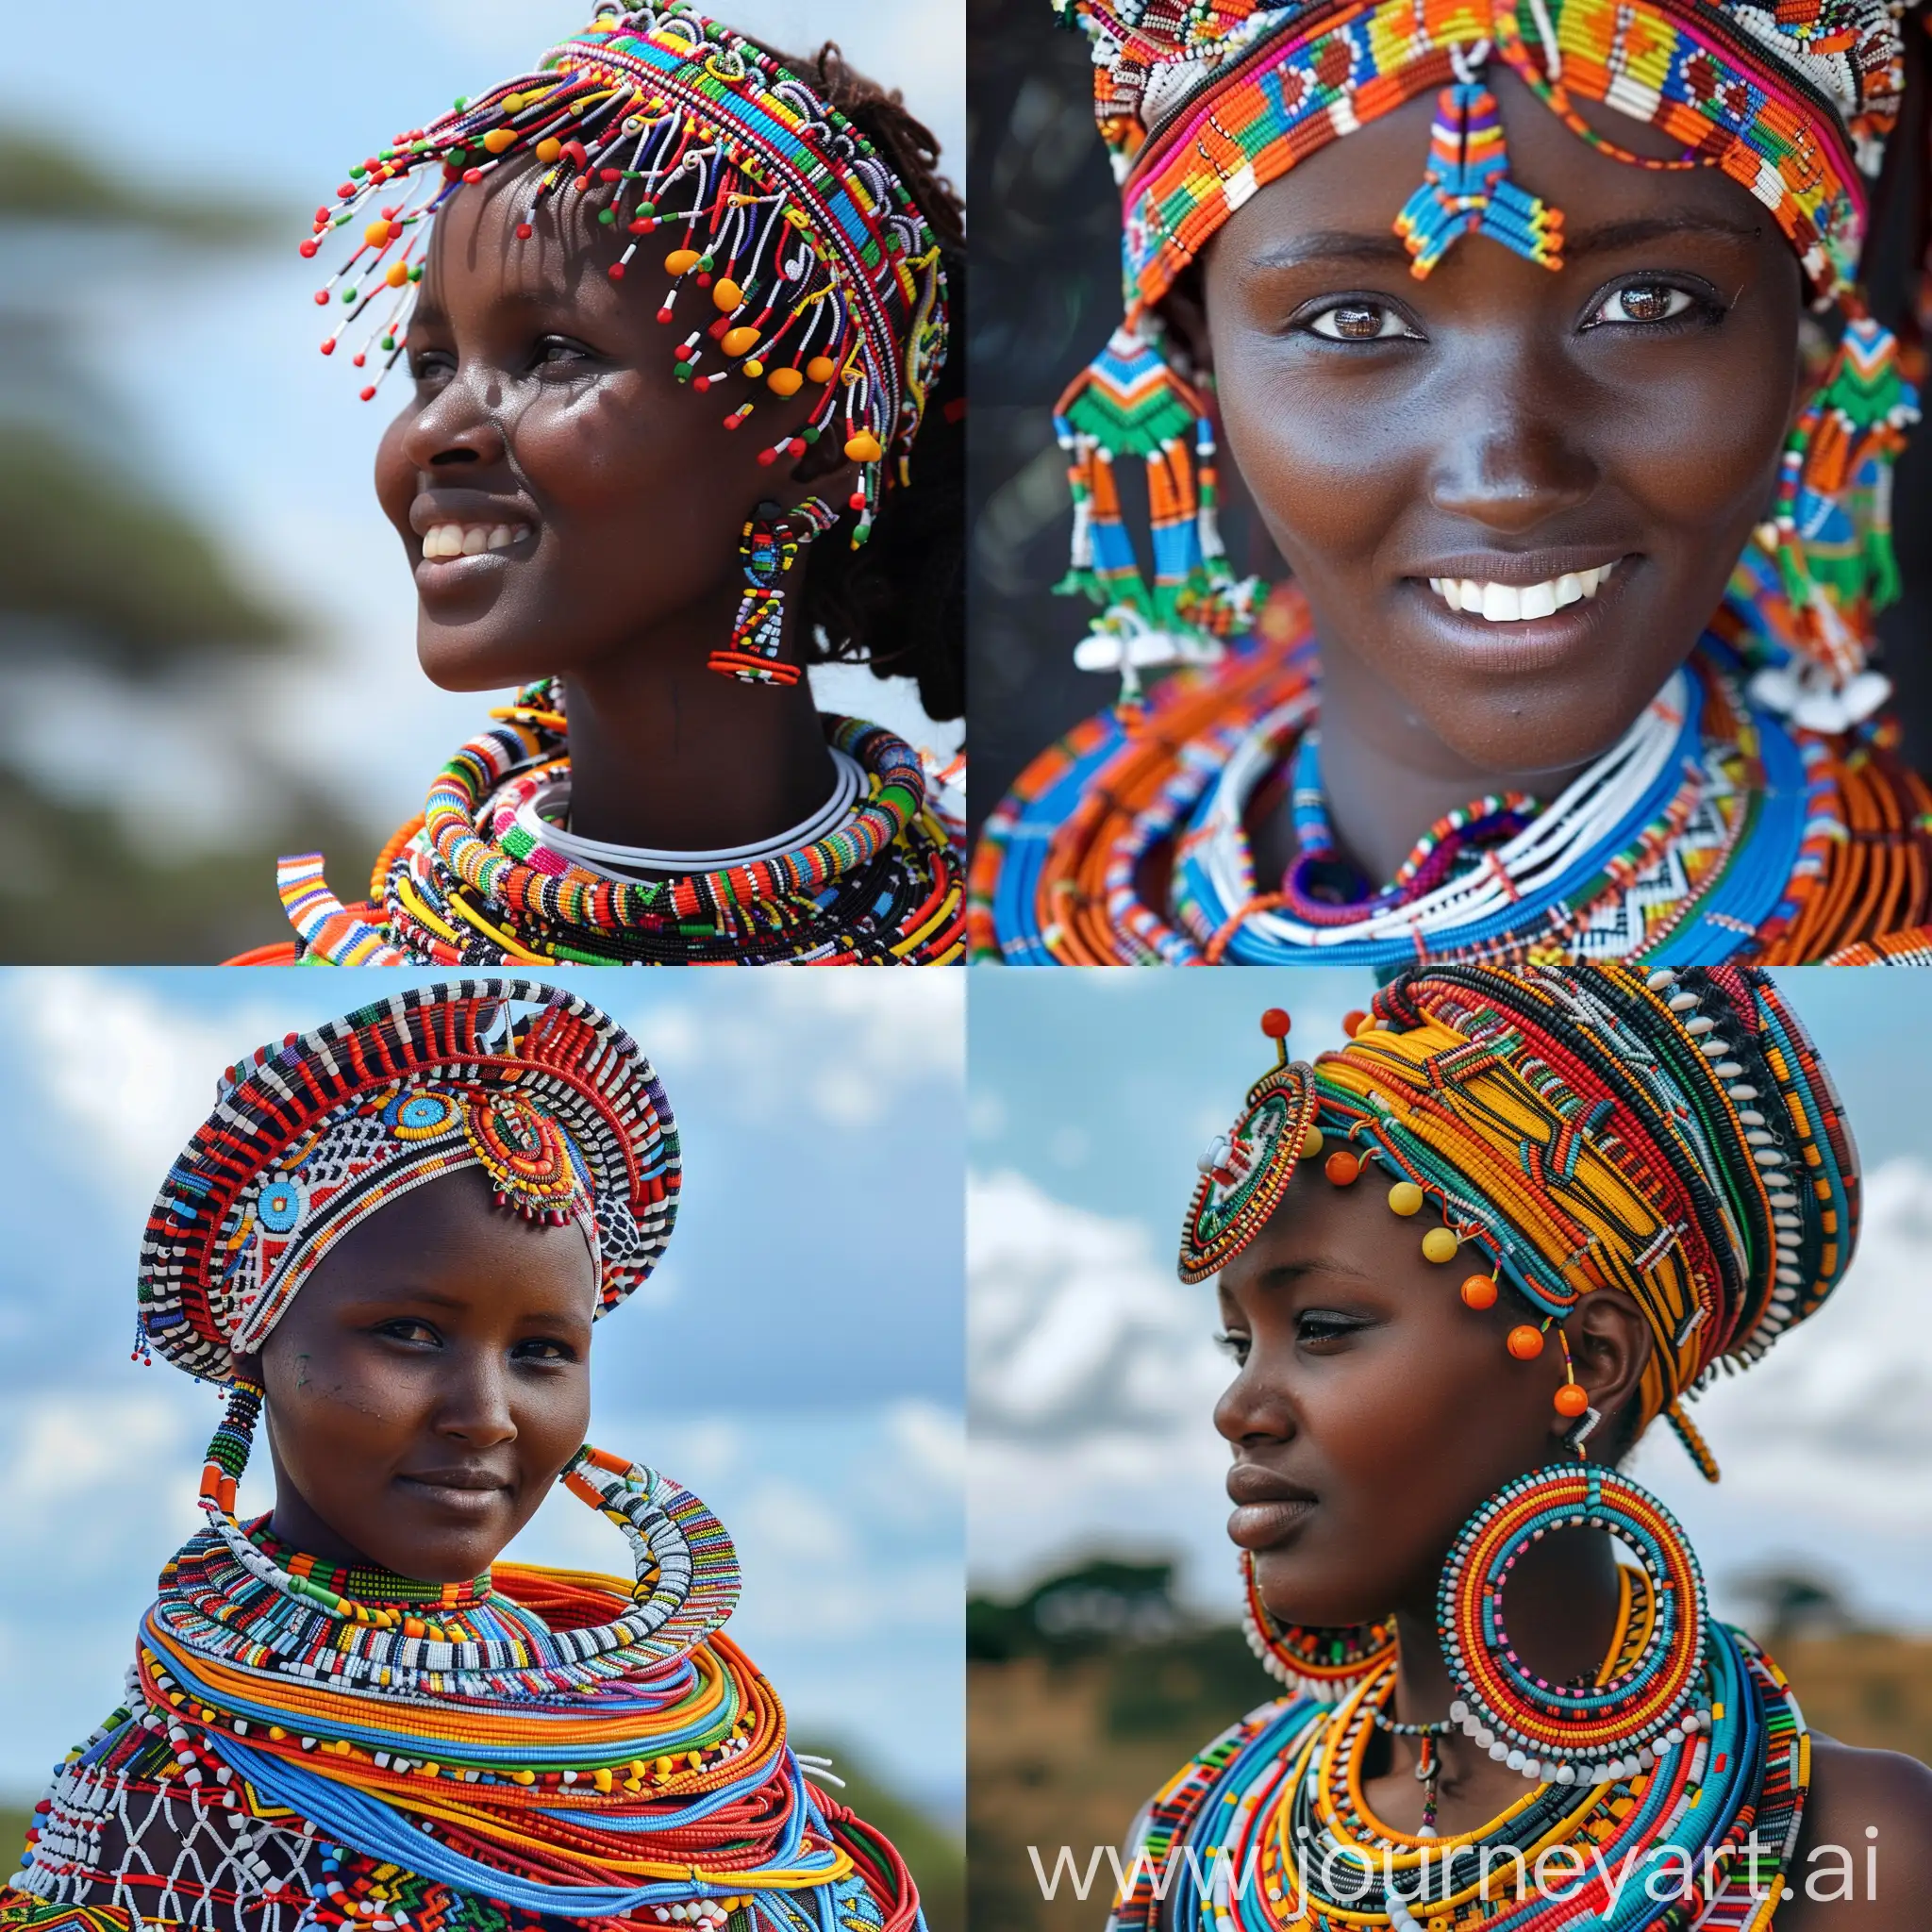 Vibrant-Kenyan-Women-Captivating-Beauty-in-a-11-Aspect-Ratio